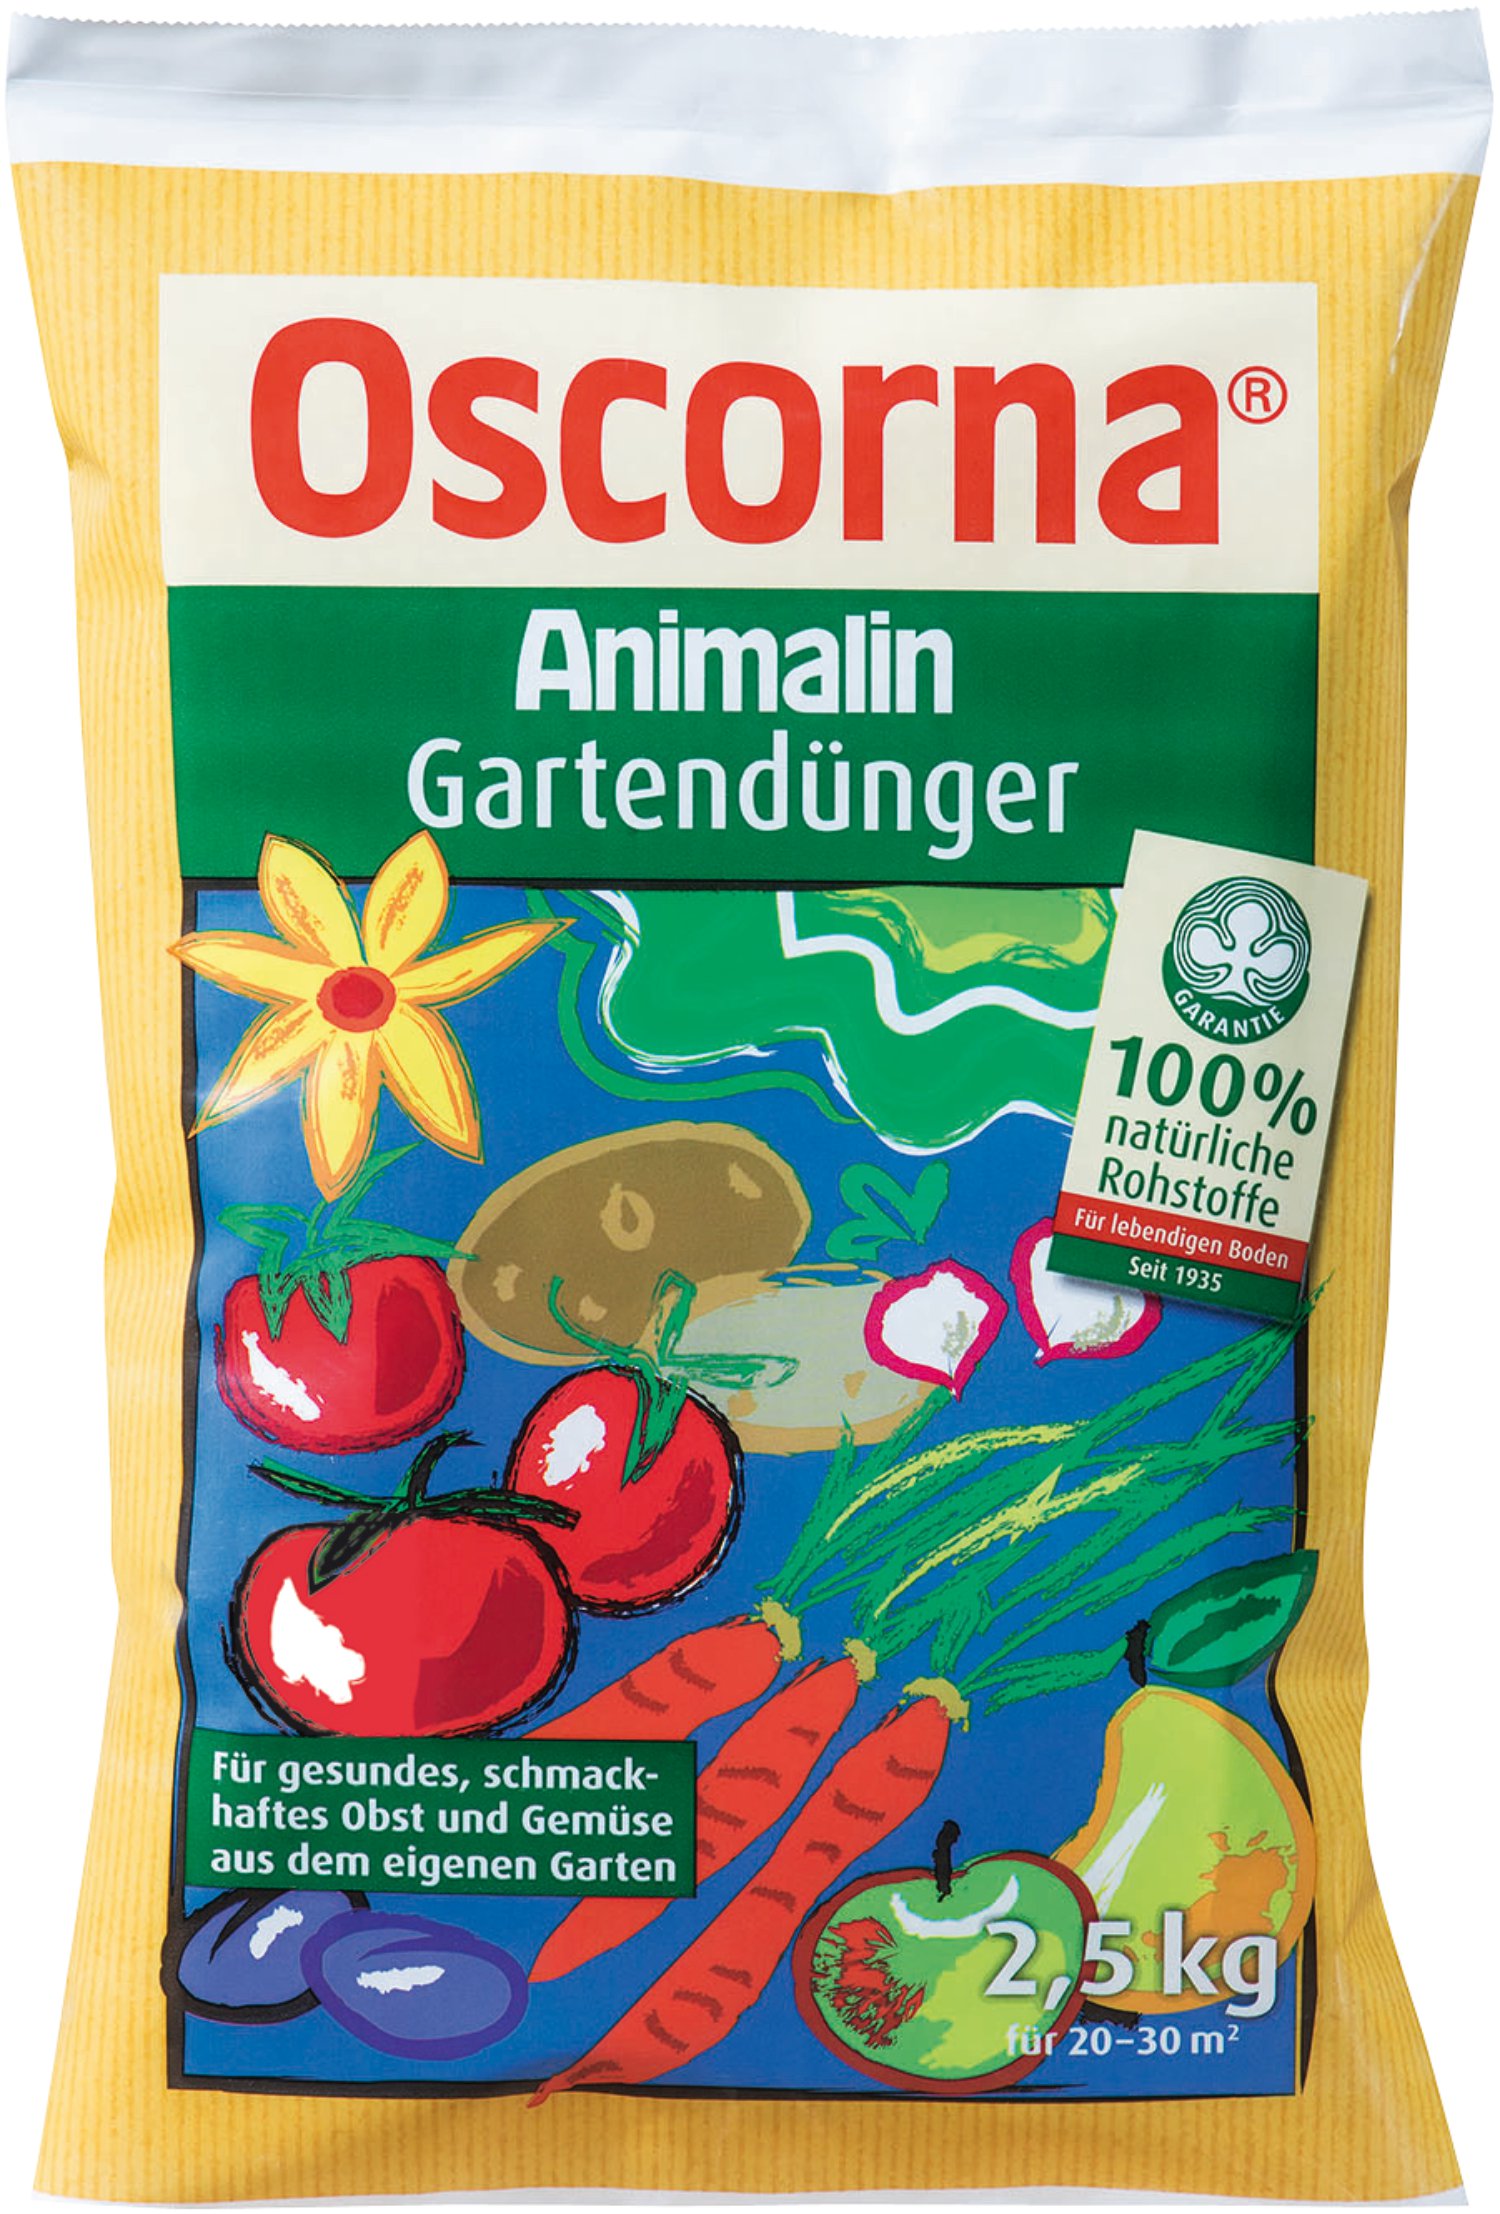 OSCORNA Animalin 2,5 kg